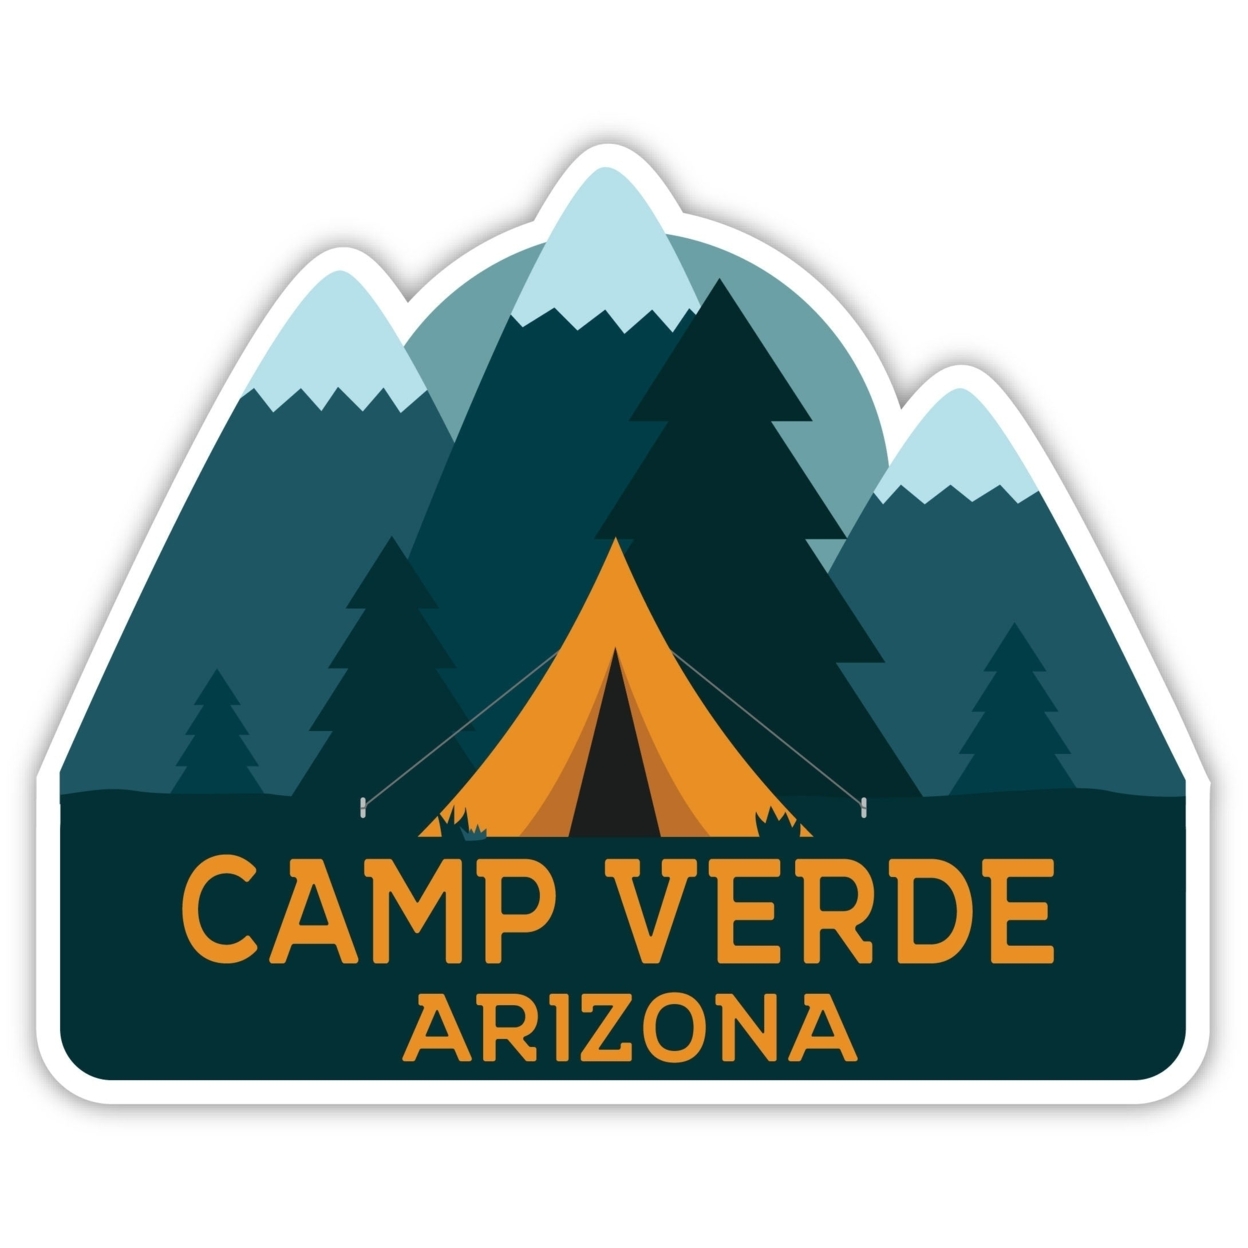 Camp Verde Arizona Souvenir Decorative Stickers (Choose Theme And Size) - 4-Pack, 2-Inch, Tent